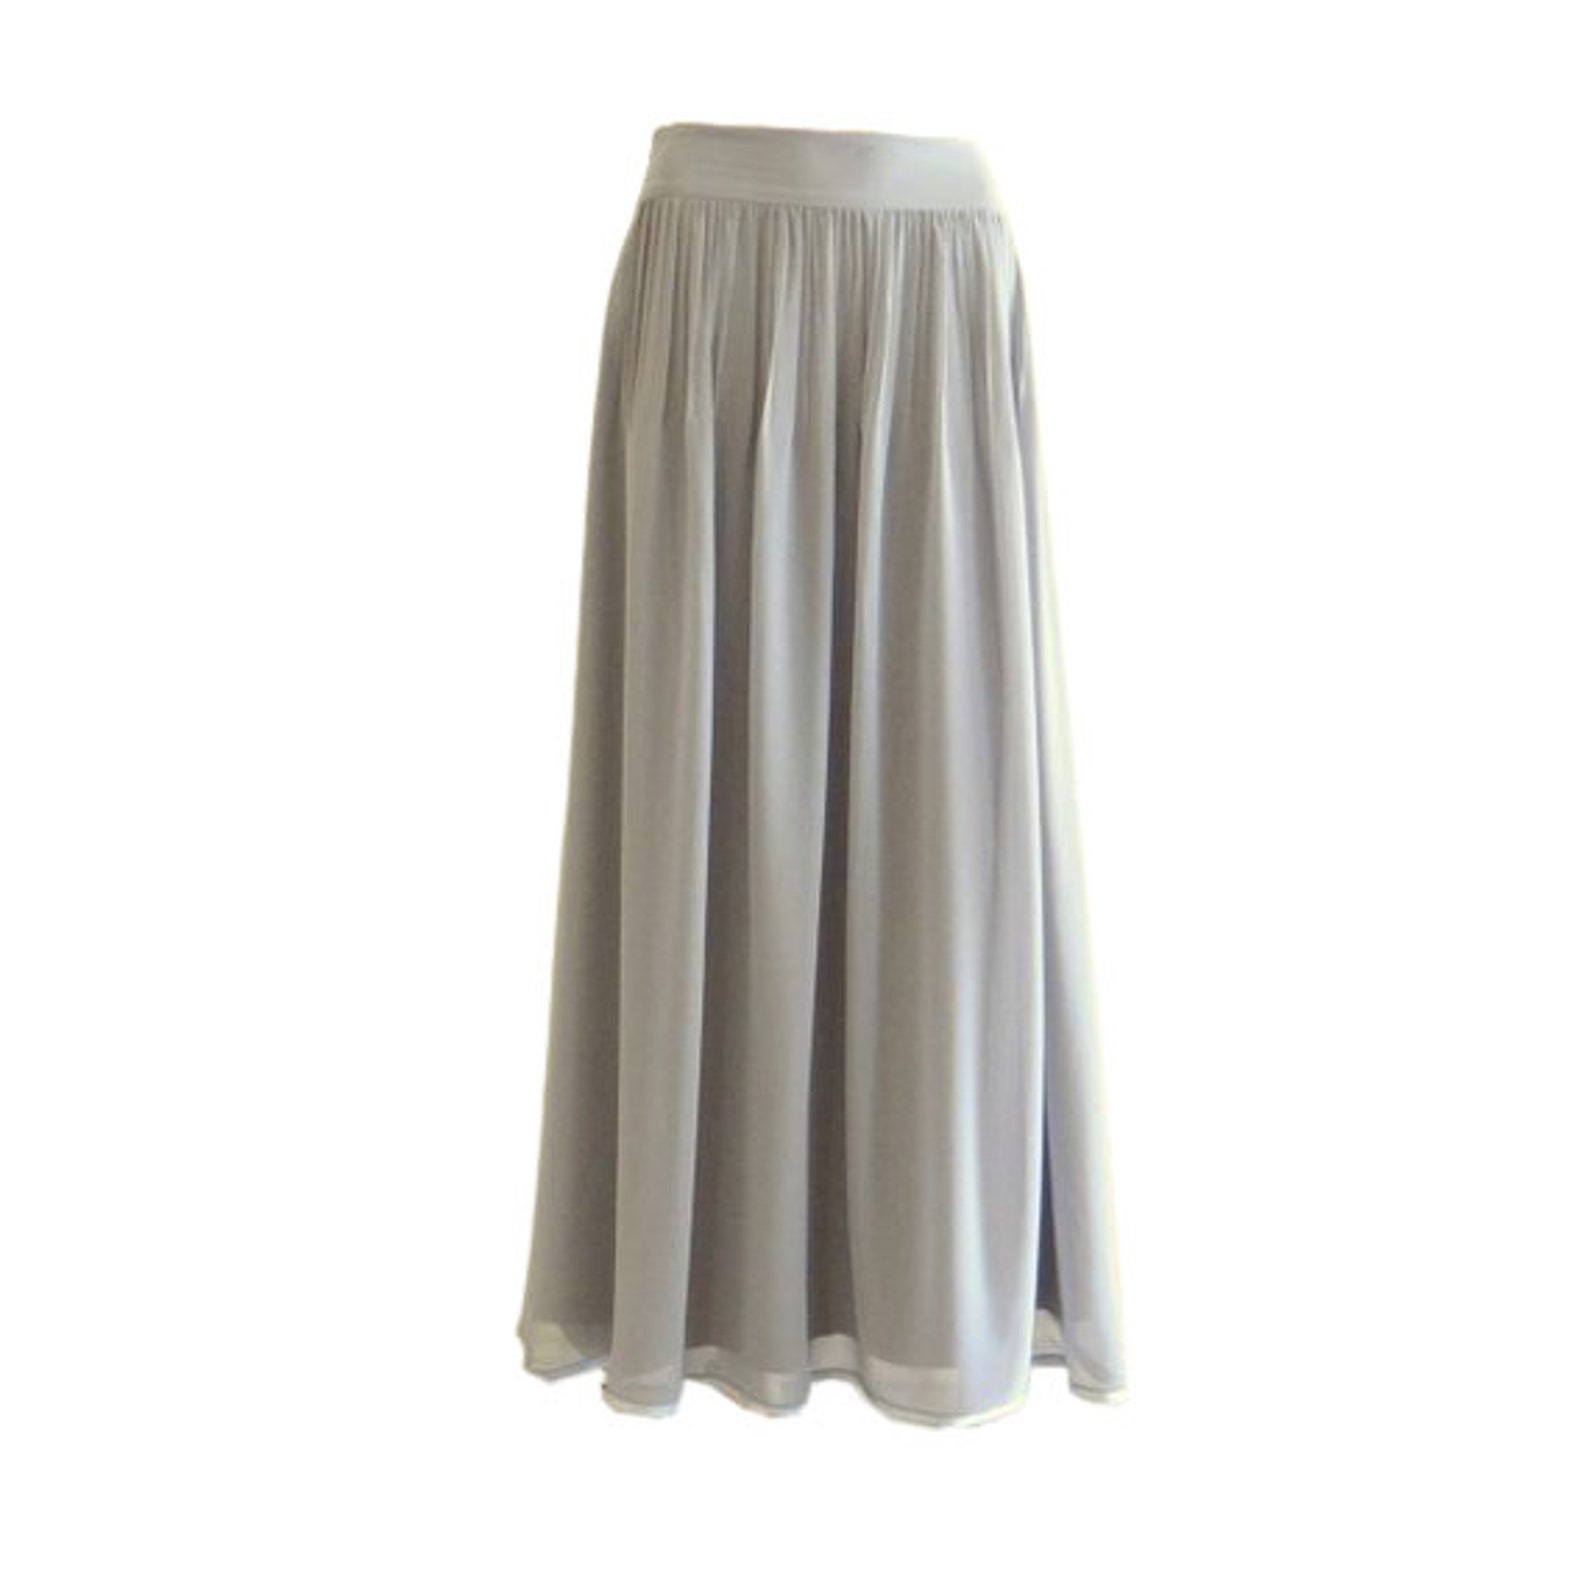 Cloud Grey Evening Skirt. Long Bridesmaid Skirt. Chiffon Party - Etsy